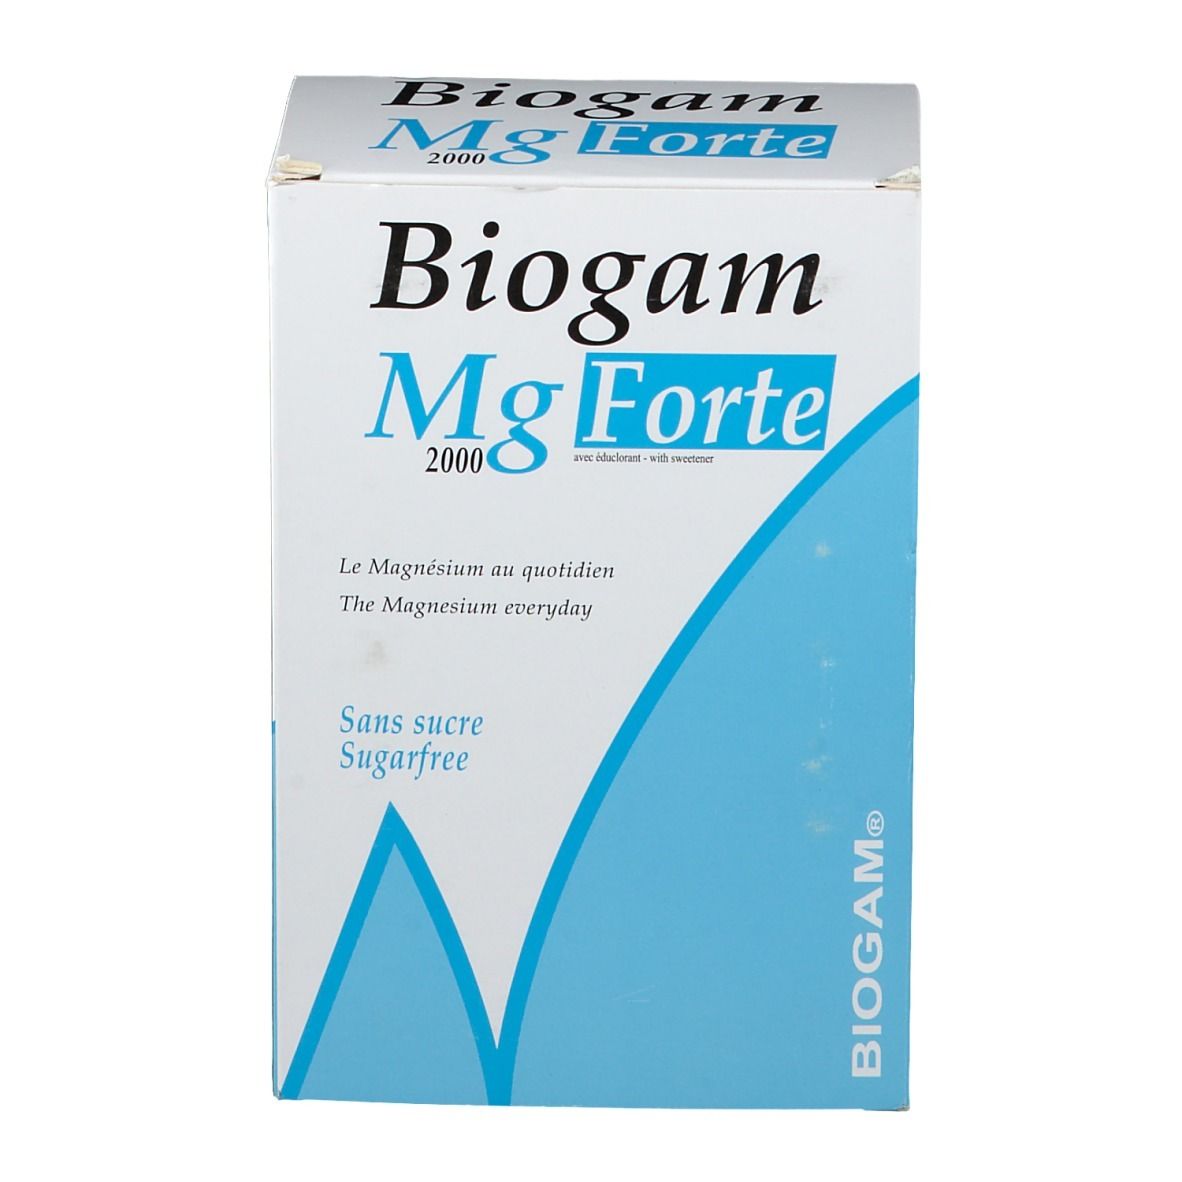 Biogam Mg Forte 5 ml